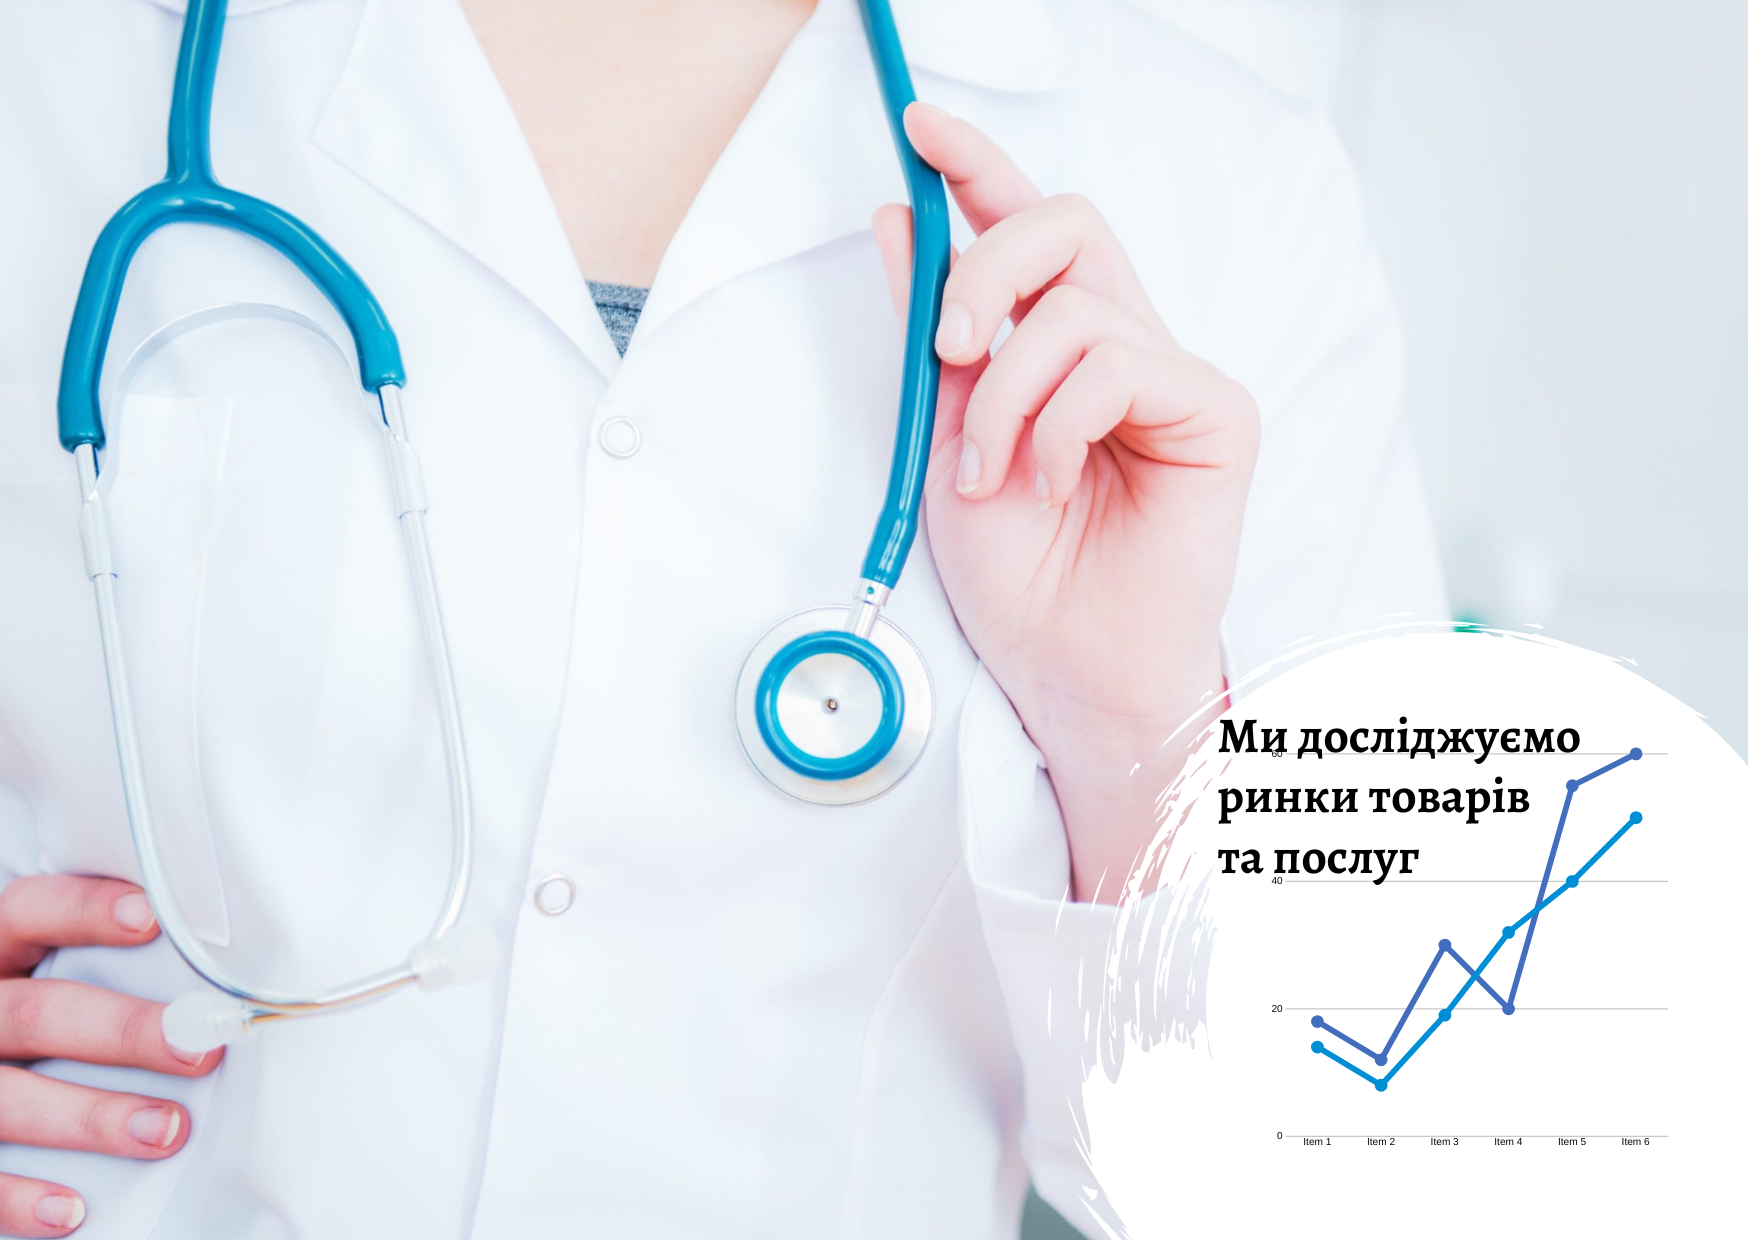 Ukrainian medical institutions market 